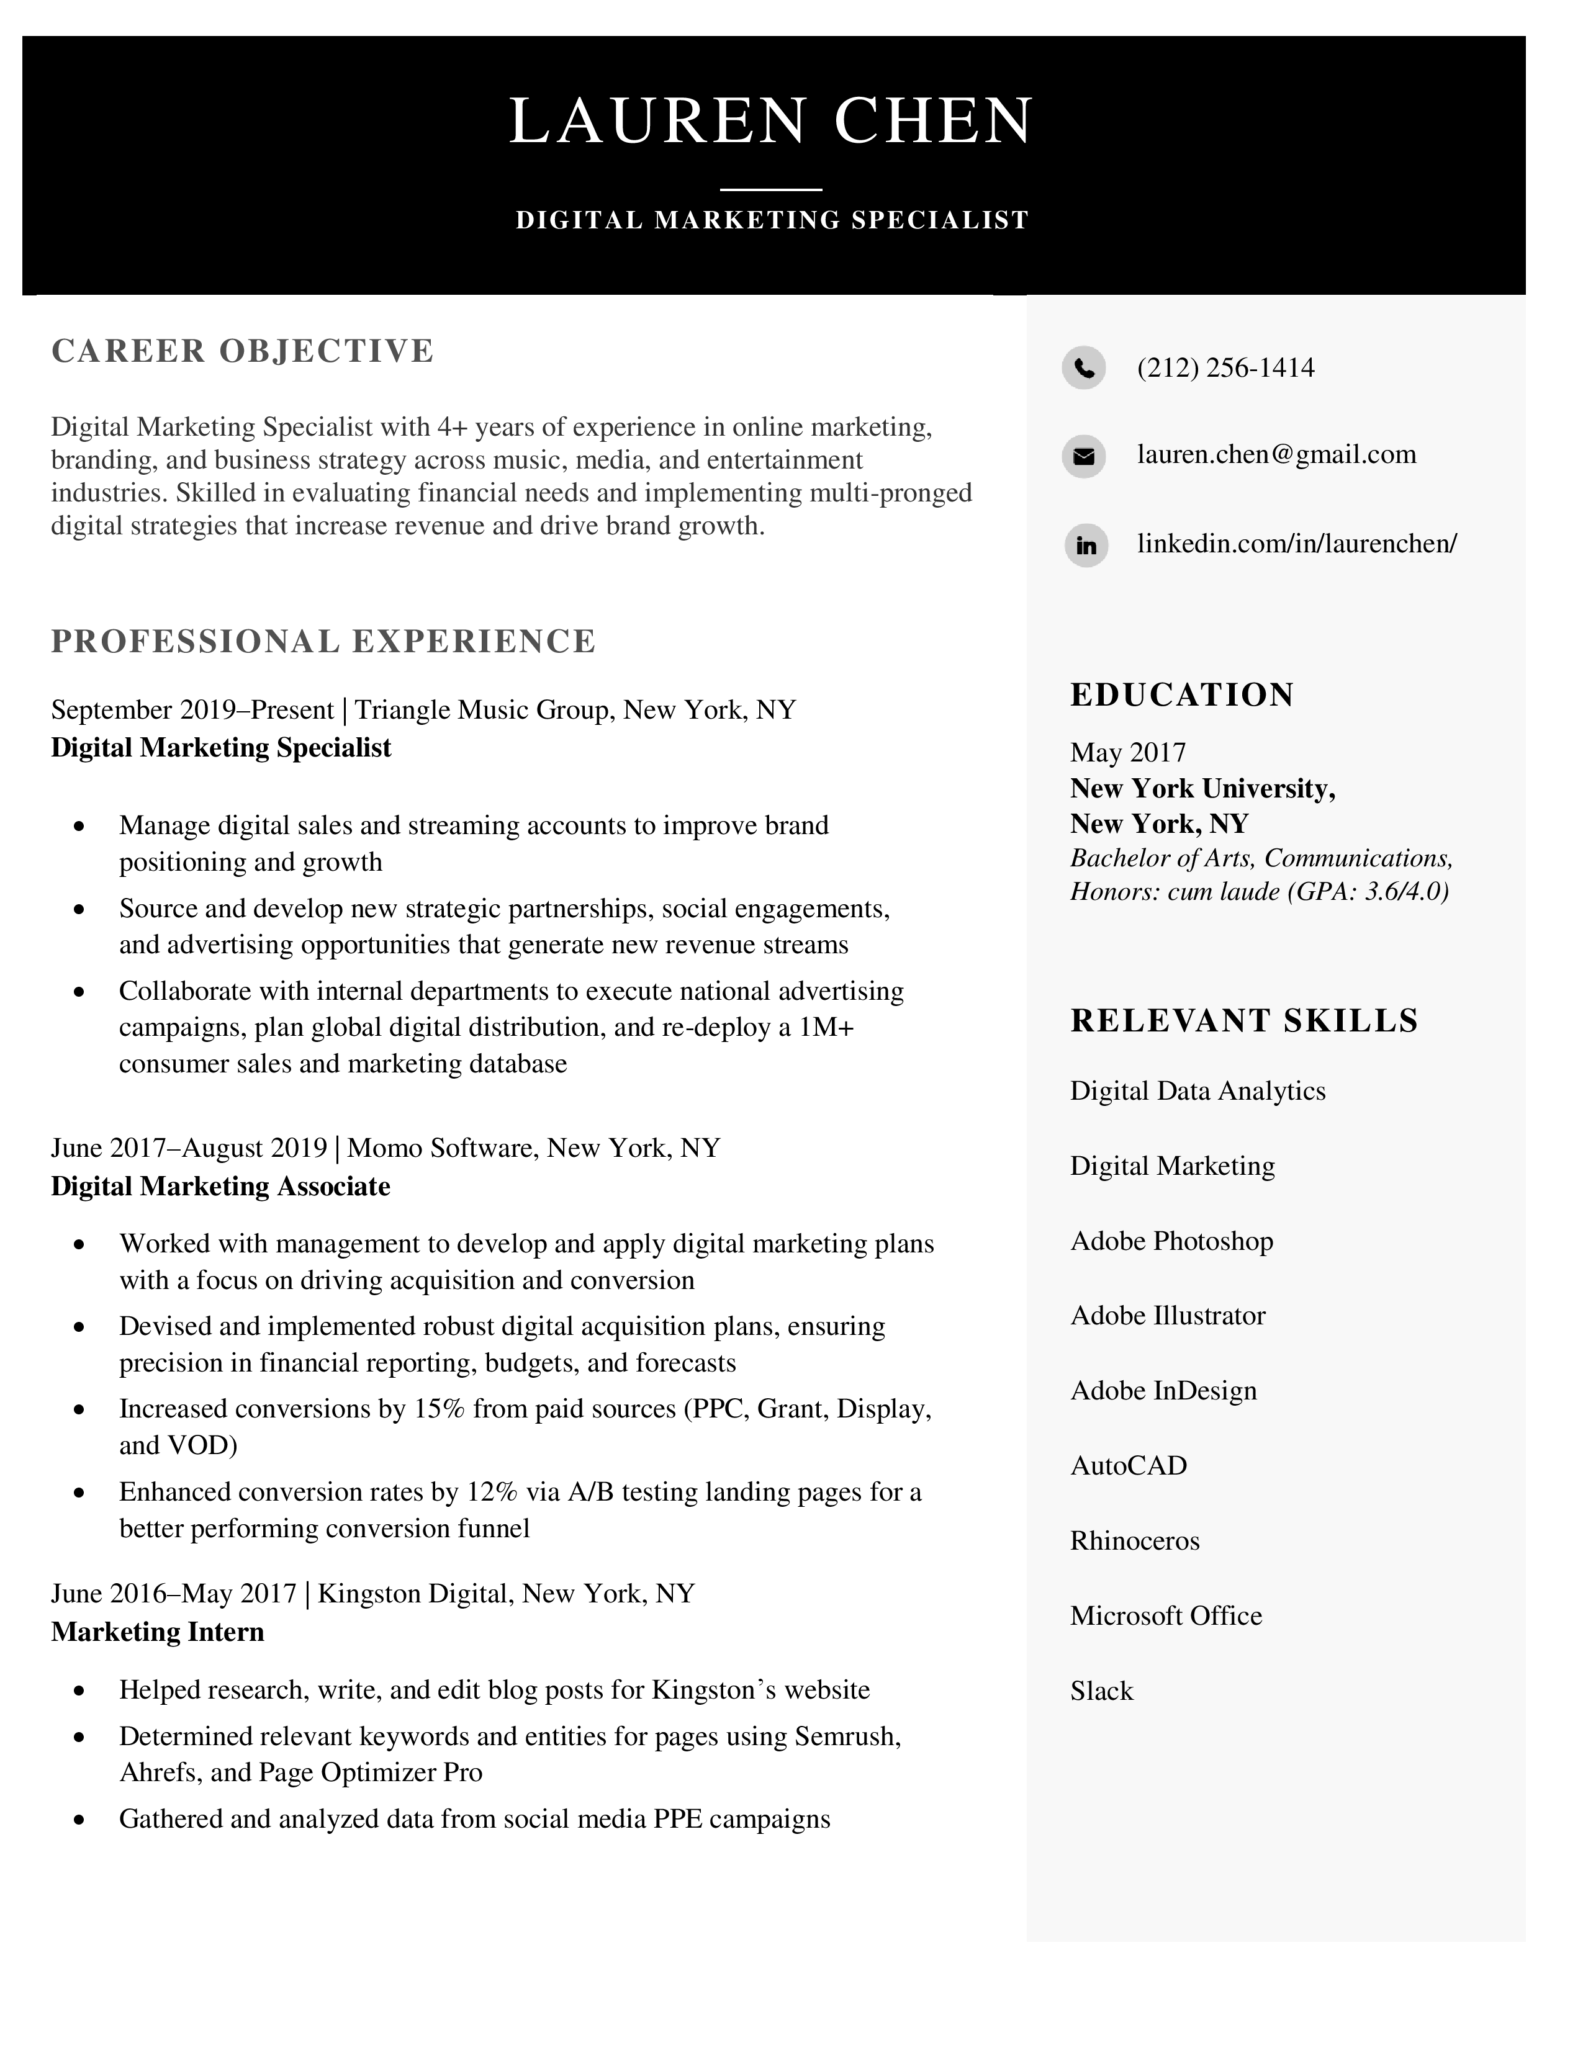 corporate-modern-resume-black-download-free-fresher-resume